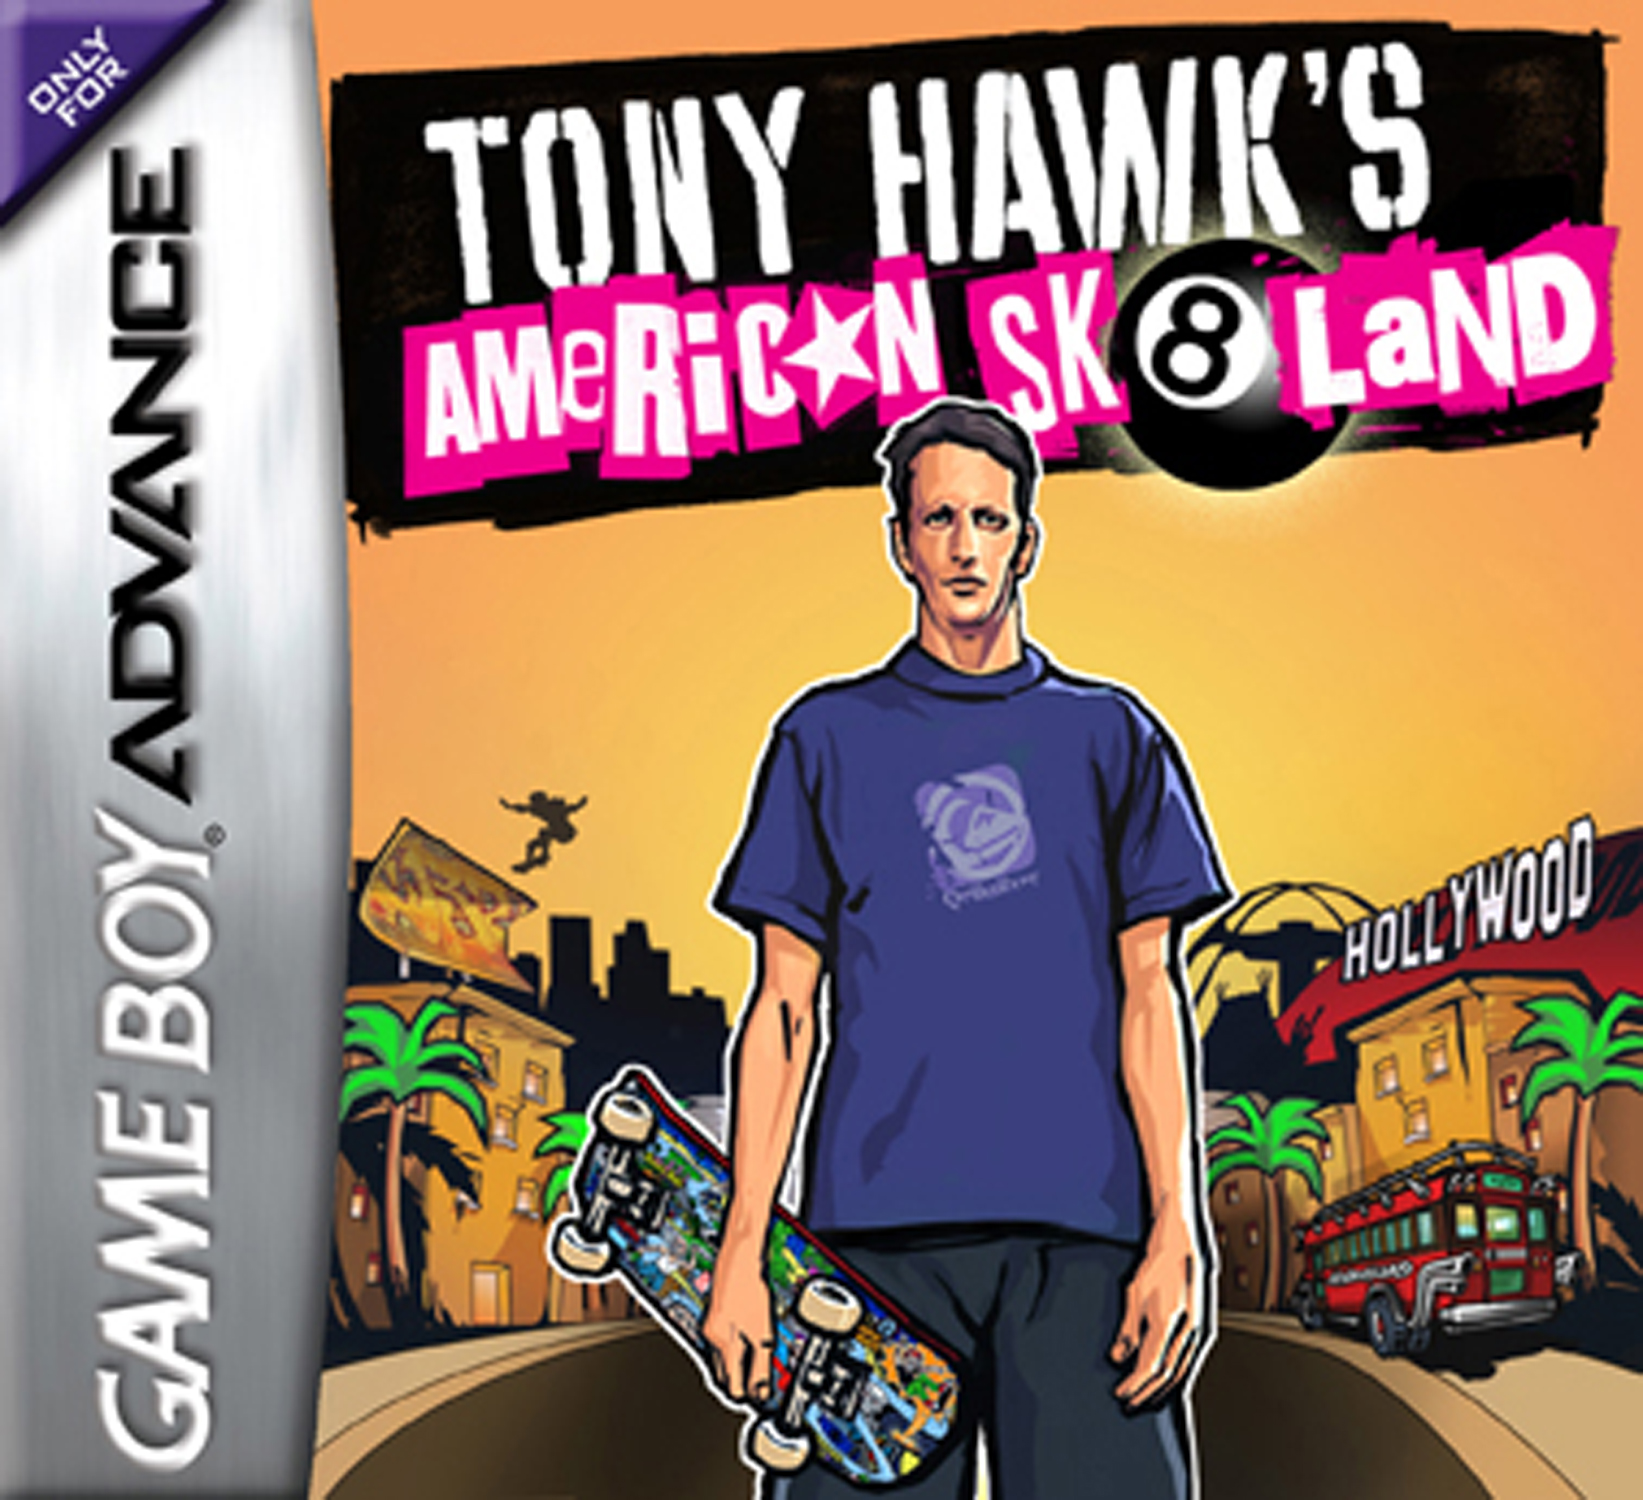 Tony Hawk’s American SK8LAND